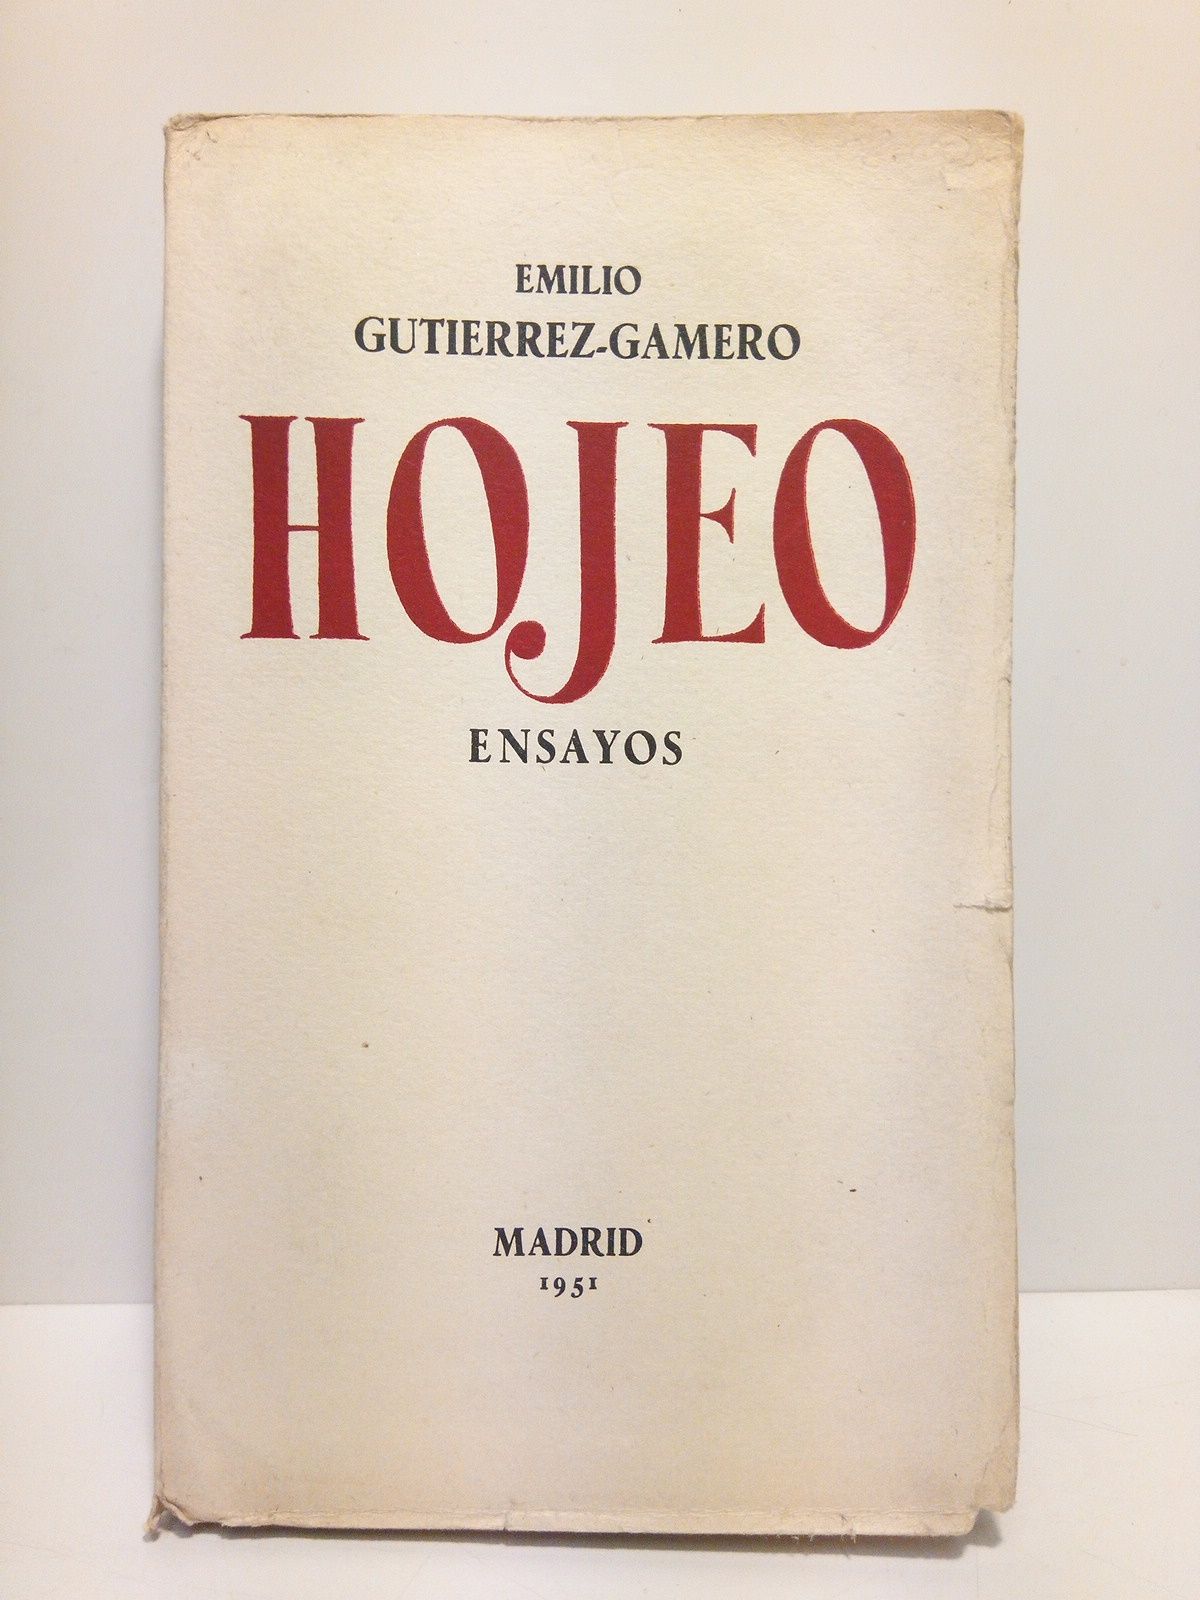 GUTIERREZ-GAMERO, Emilio - Hojeo (Ensayos)